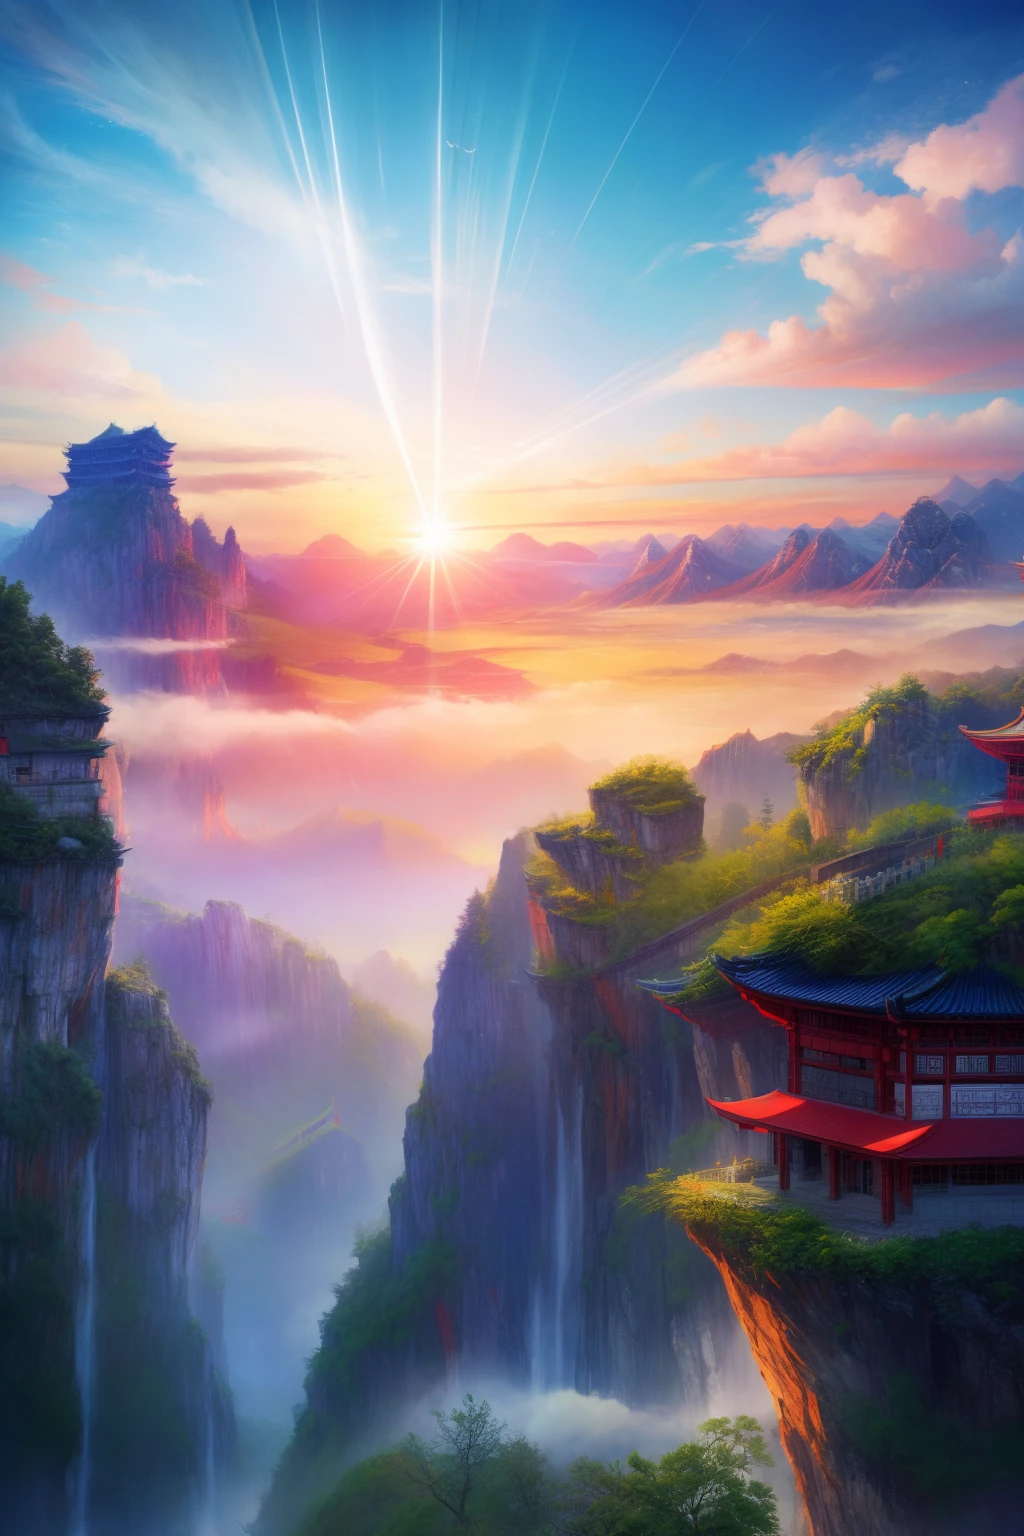 Hay un pequeño edificio rojo en la montaña., autor：Cheng Jiasui, paisaje chino, autor：Yuan Jiang, una imagen de paisaje increíble, zhangjiajie temprano en la mañana, autor：Liu Haisu, por Raymond Han, montañas impresionantes, autor：Xia Yong, montañas flotantes, increiblemente bonito, por Ren Xiong, parque forestal nacional de zhangjiajie